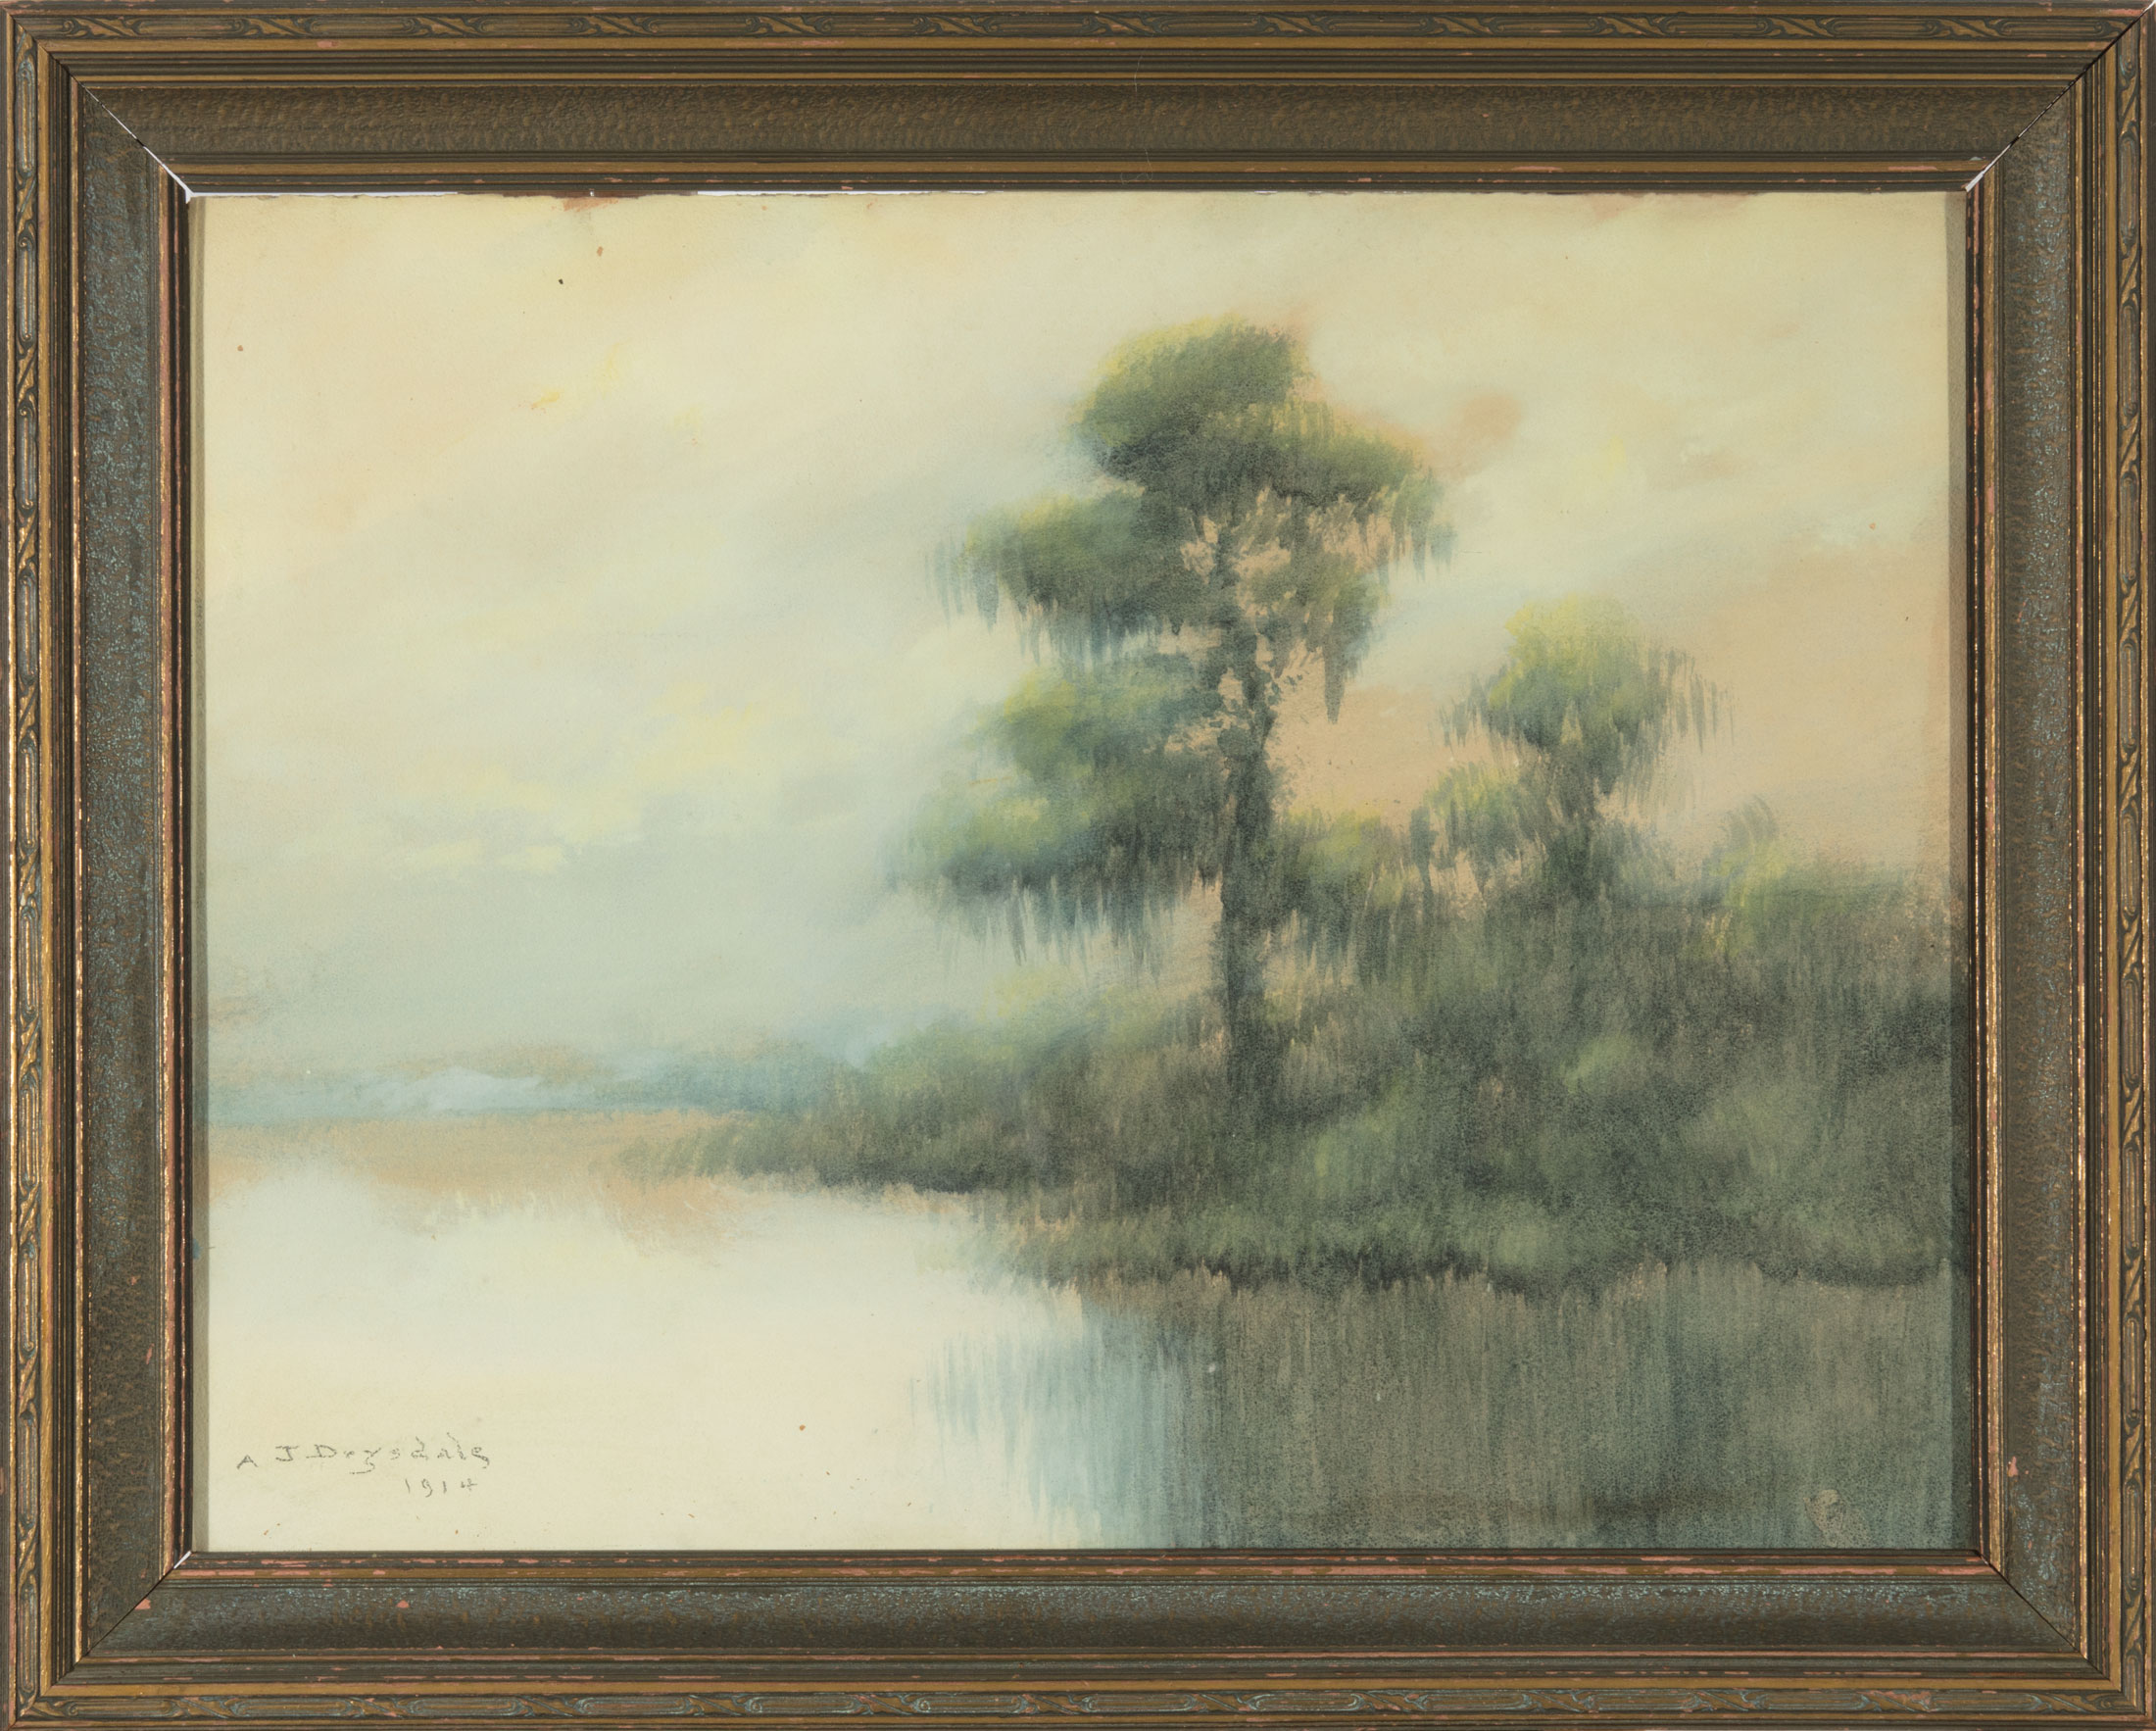 Alexander John Drysdale (American/New Orleans, 1870-1934), "A Louisiana Cypress Swamp", 1914, oil